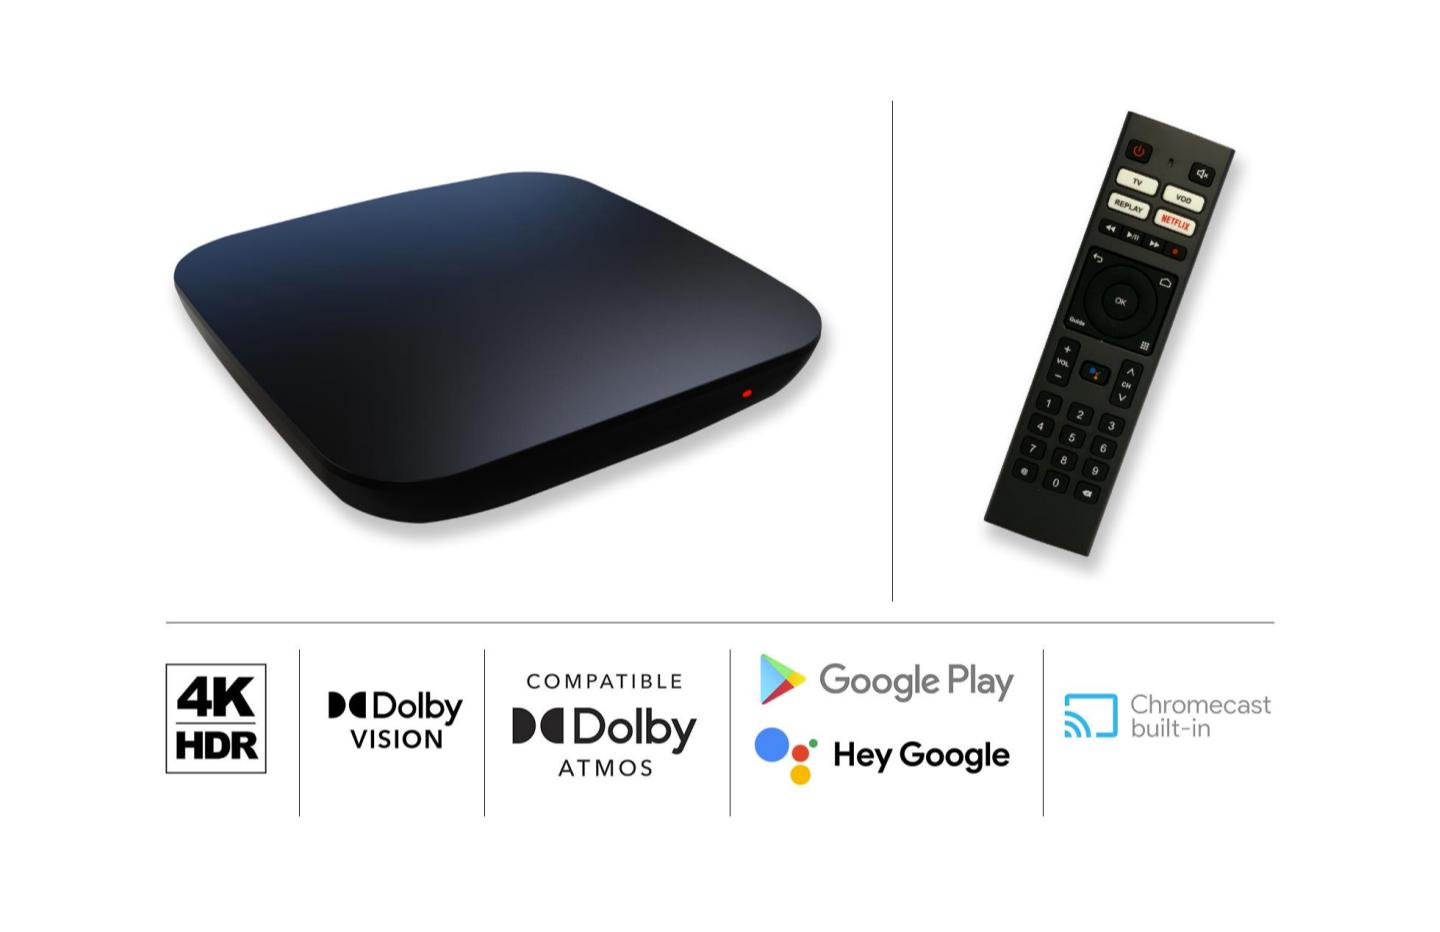 Freebox Pop vs Mini 4K : quelle box Android TV est la meilleure ? Freebox  Pop vs Mini 4K : quelle box Android TV est la meilleure ?